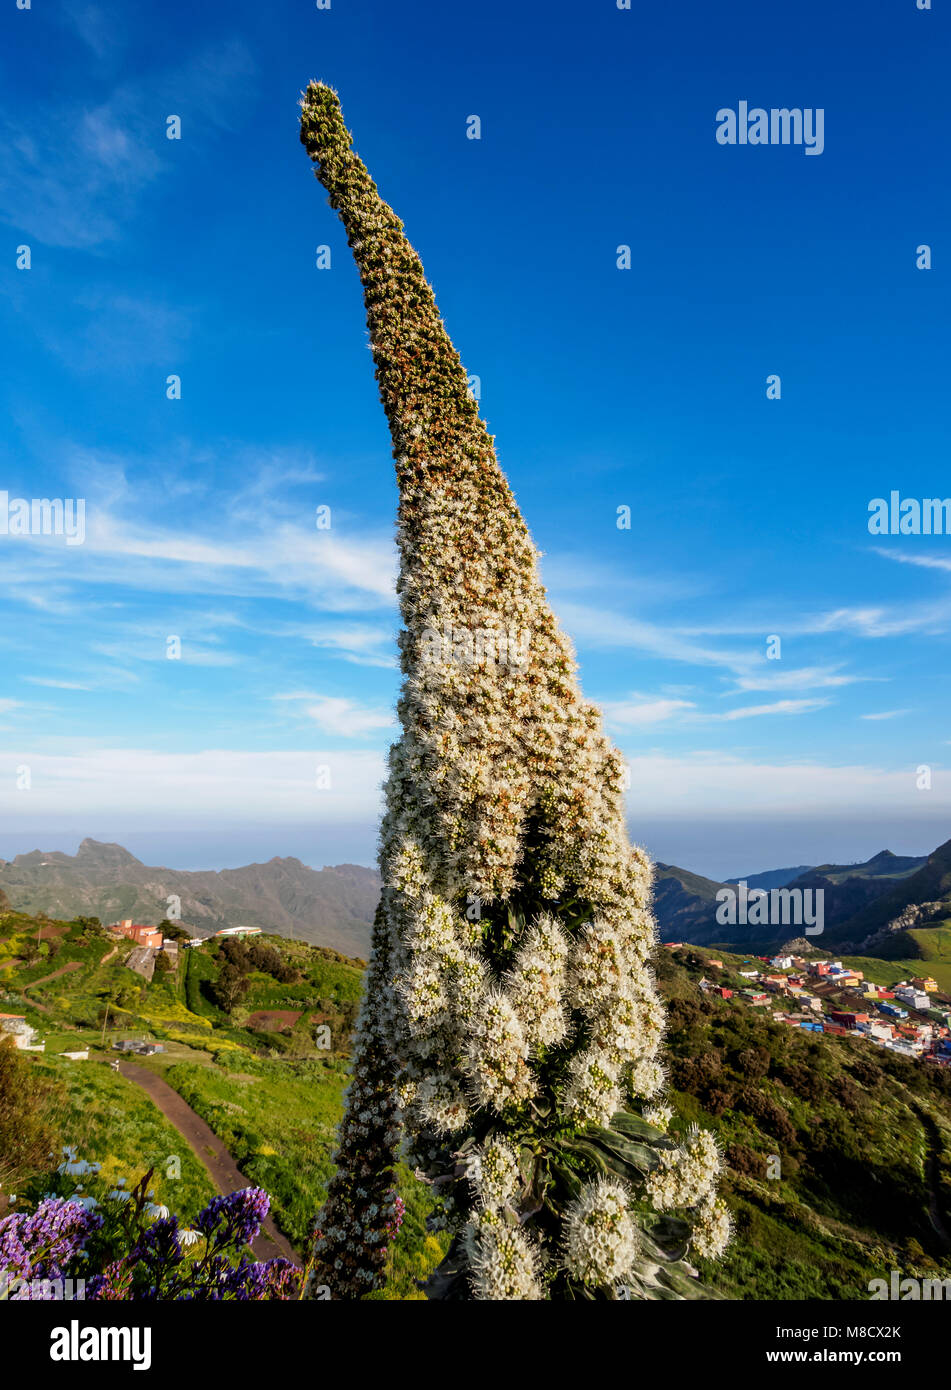 Arrebol tajinaste(Echium simplex), endemic plant, Mirador de Jardina, Tenerife Island, Canary Islands, Spain Stock Photo